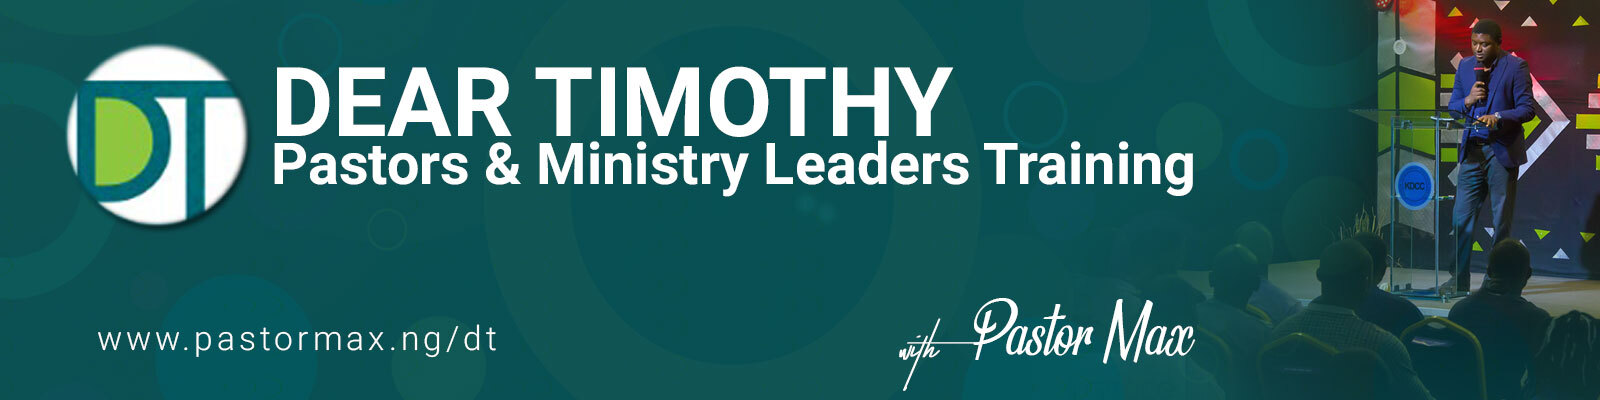 The Dear Timothy Pastors Podcast